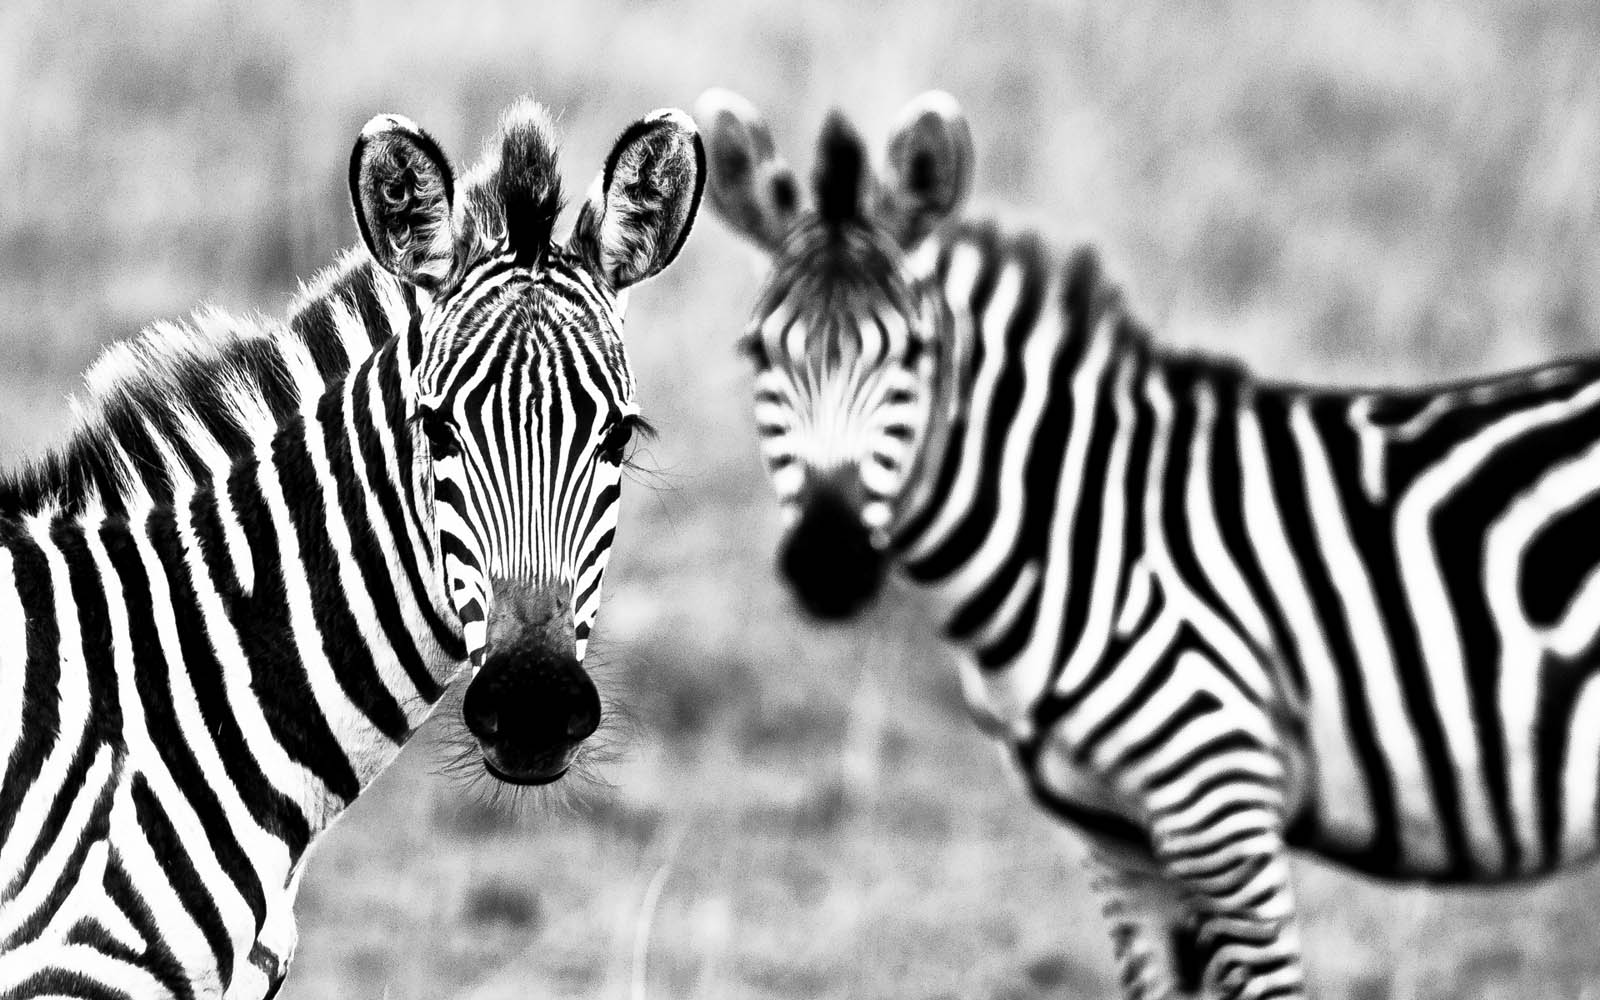 Fondos de Zebra - Los mejores fondos de Zebra gratis - WallpaperAccess